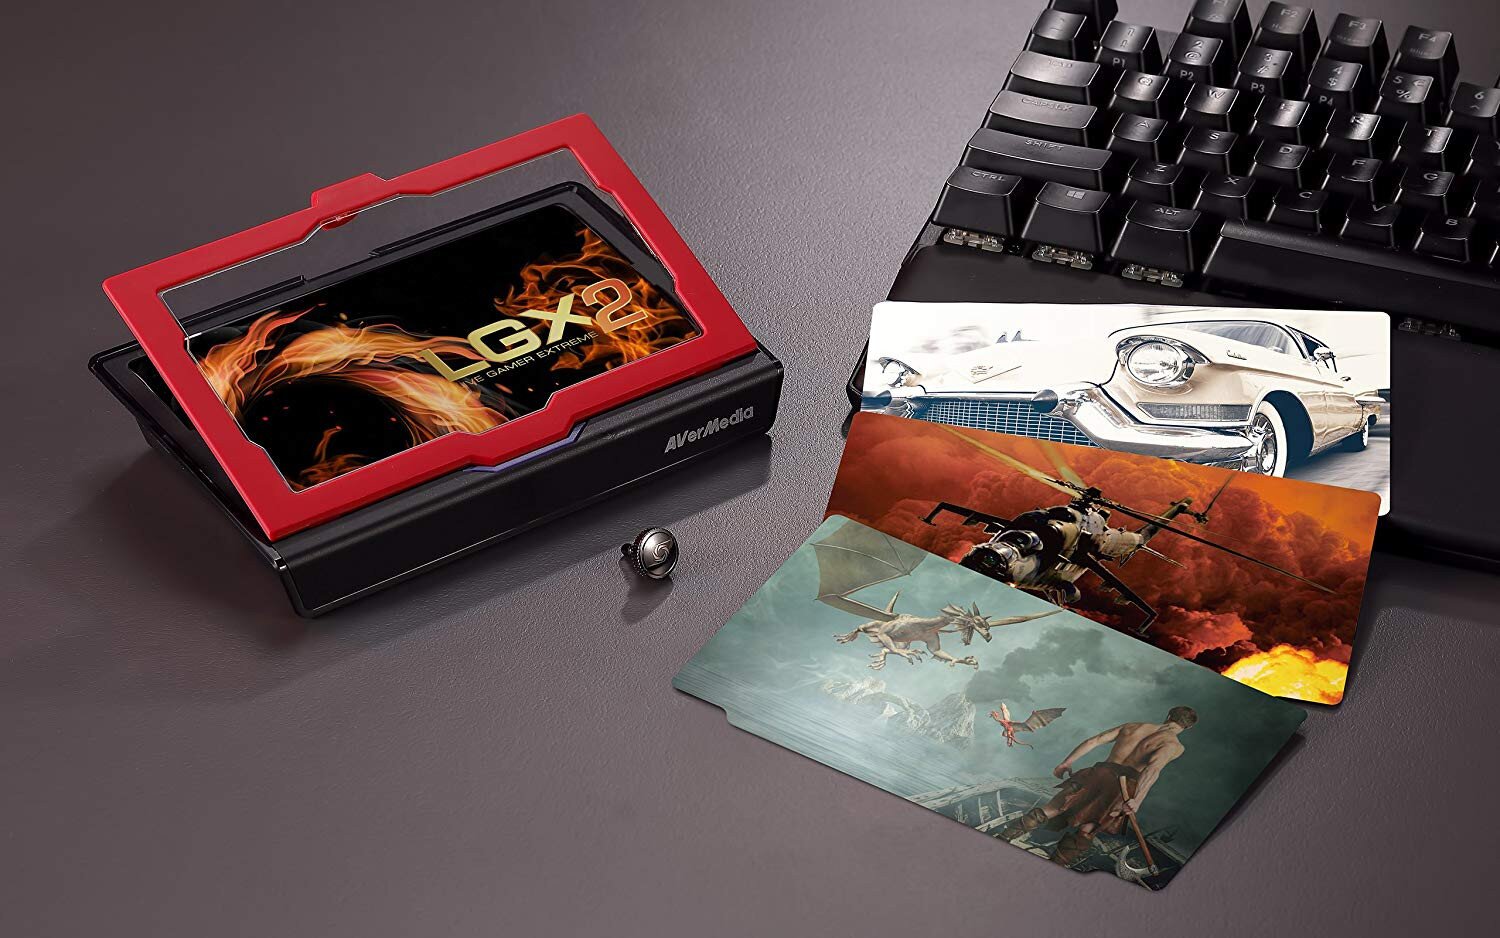 Buy Avermedia Live Gamer Extreme 2 Capture Device Online